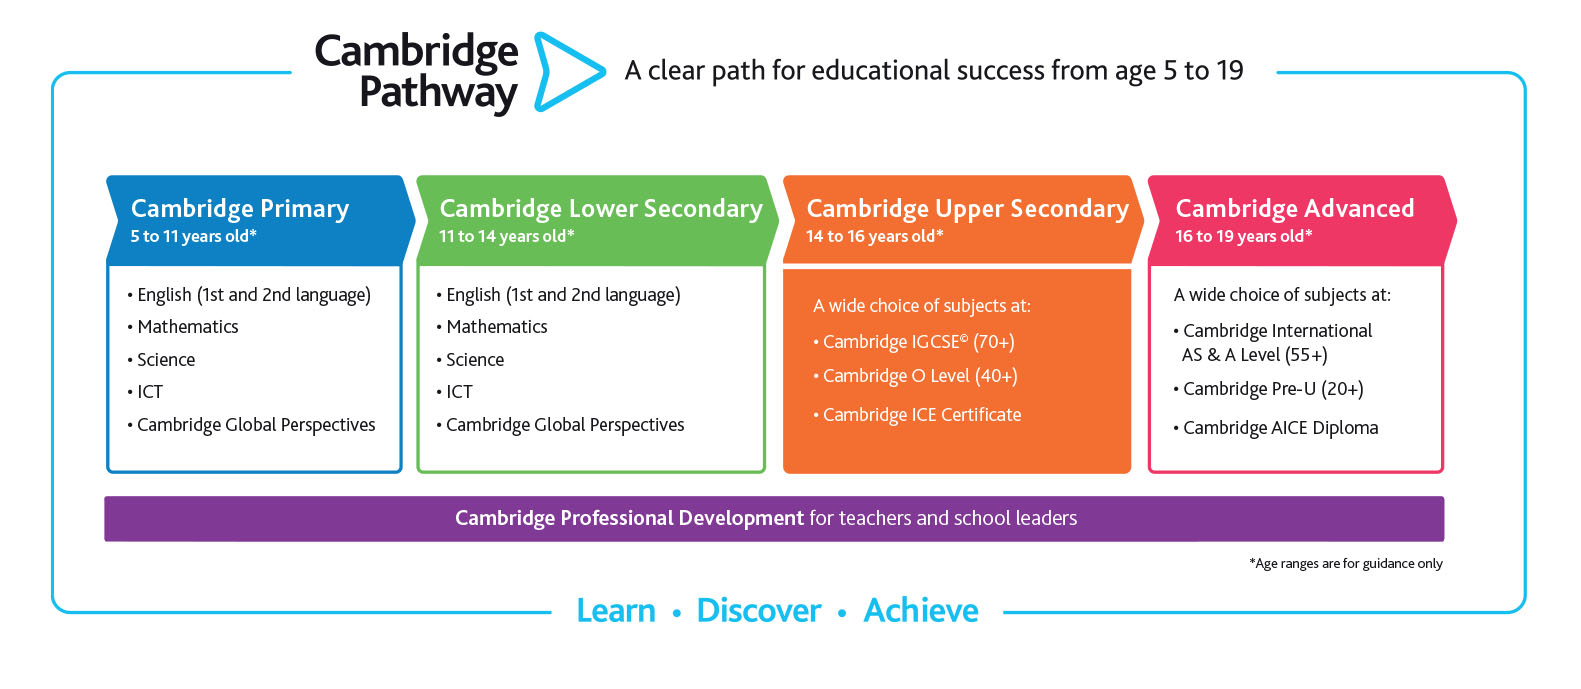 Cambridge IGCSE Grading, Knowledge on Cambridge IGCSE Grading helps you  prepare for the exam., By Broadway IGCSE Centre